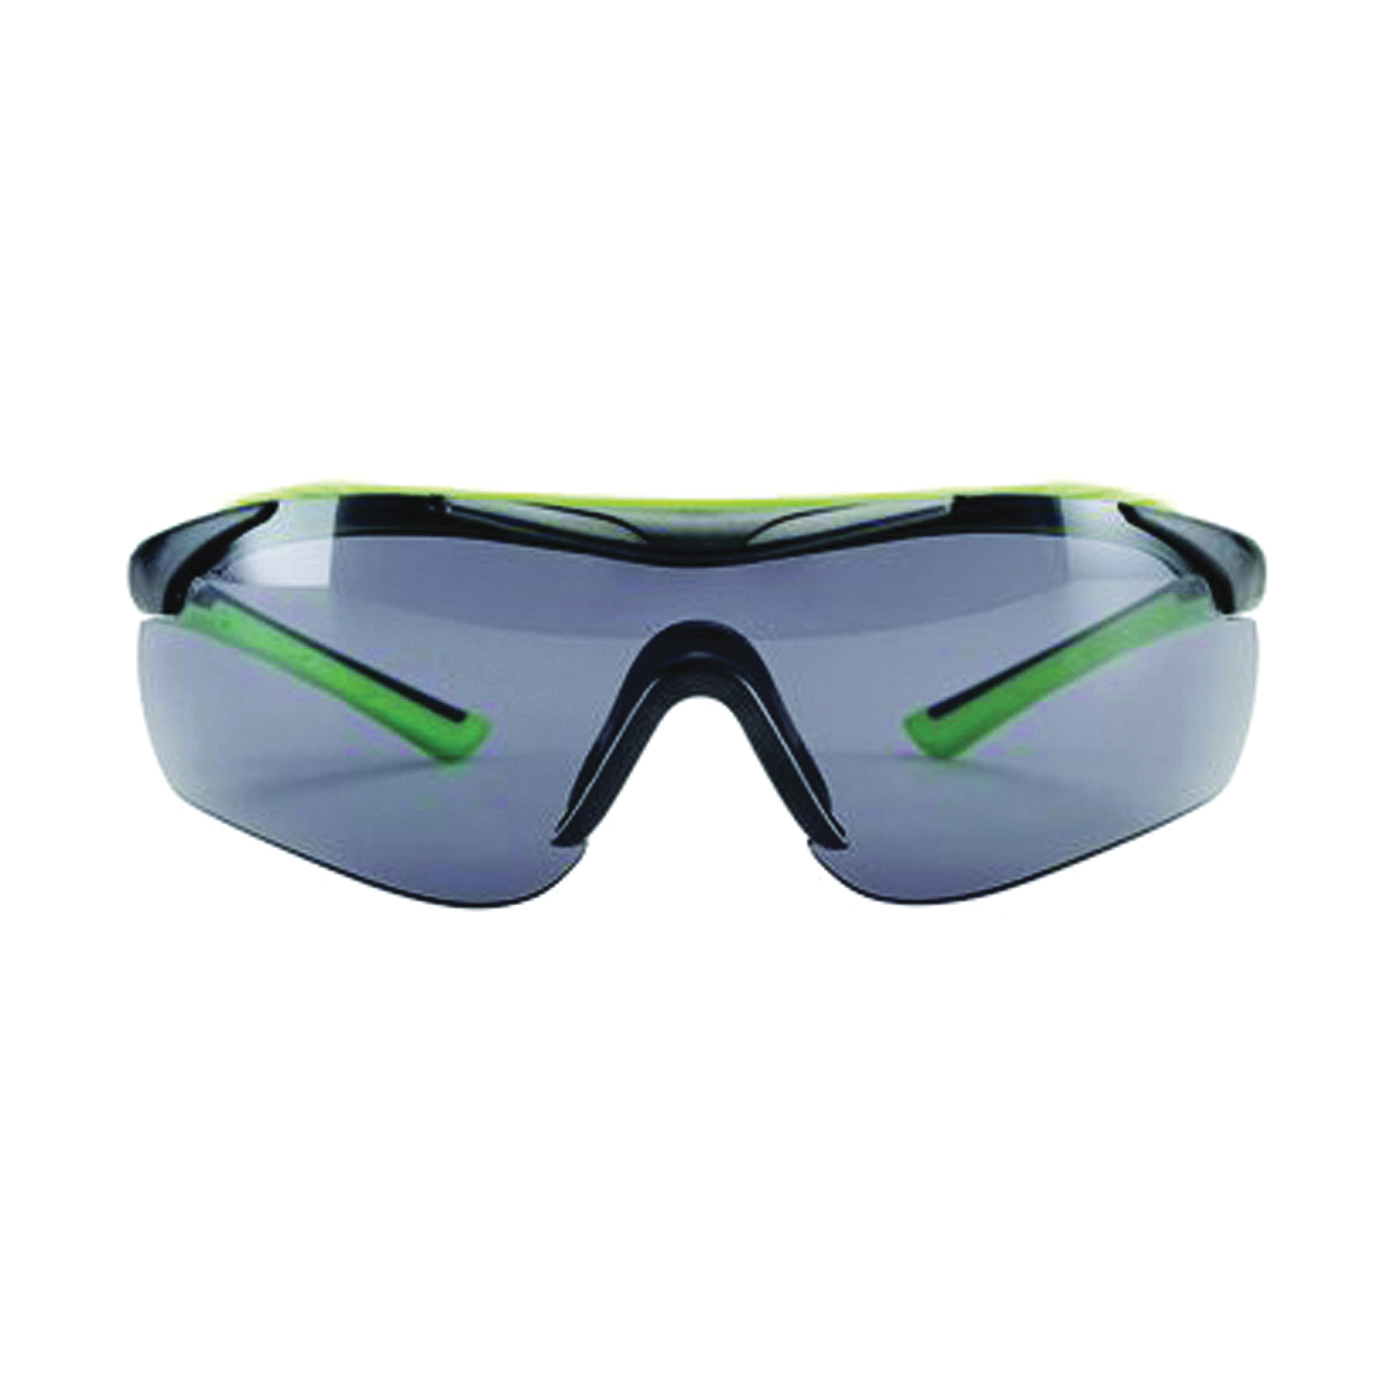 47101-WZ4 Sport-Inspired Safety Glasses, Anti-Fog, Anti-Scratch Lens, Wraparound Frame, Green/Neon Black Frame